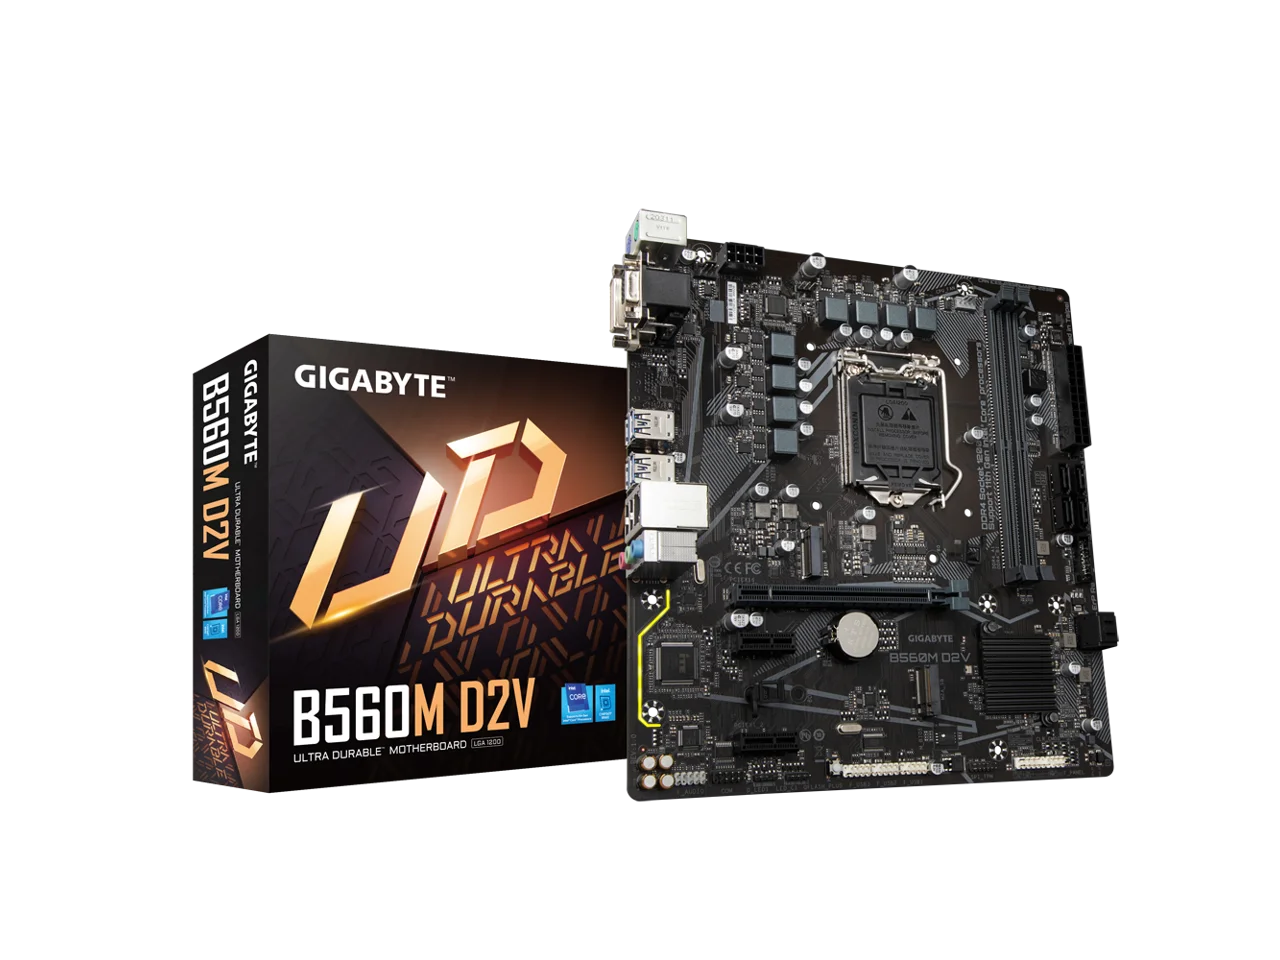 

For GIGABYTE B560M D2V Ultra Durable Motherboard PCIe 4.0 M.2, GIGABYTE 8118 Gaming LAN, RGB FUSION 2.0, Q-Flash Plus